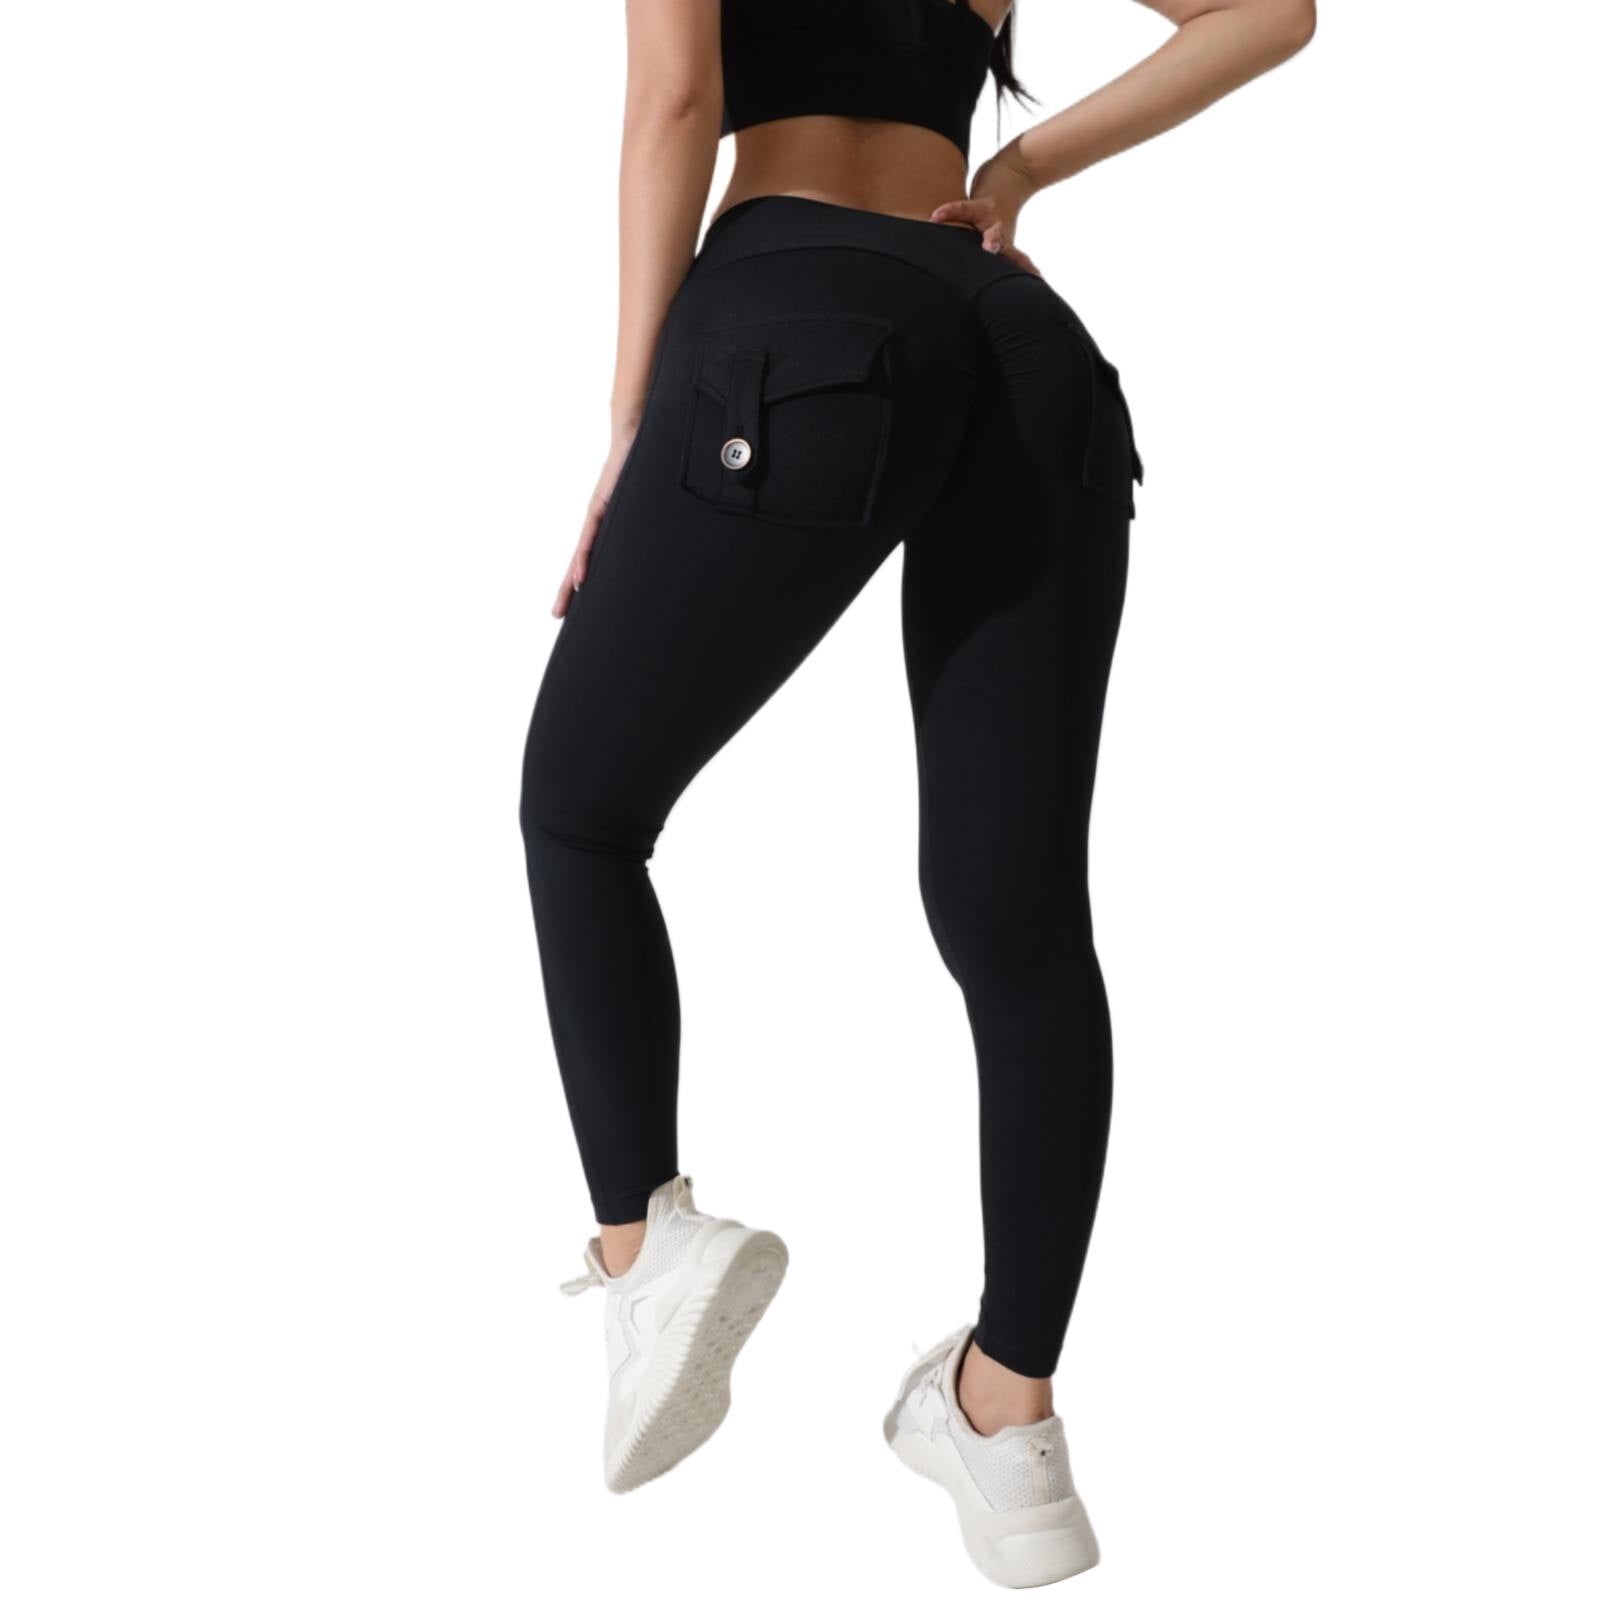  Customer reviews: Tulucky Women's PU Leather Thong  Pacthwork Pants High Waist Butt Lifting Yoga Tight Leggings(Black,XL)